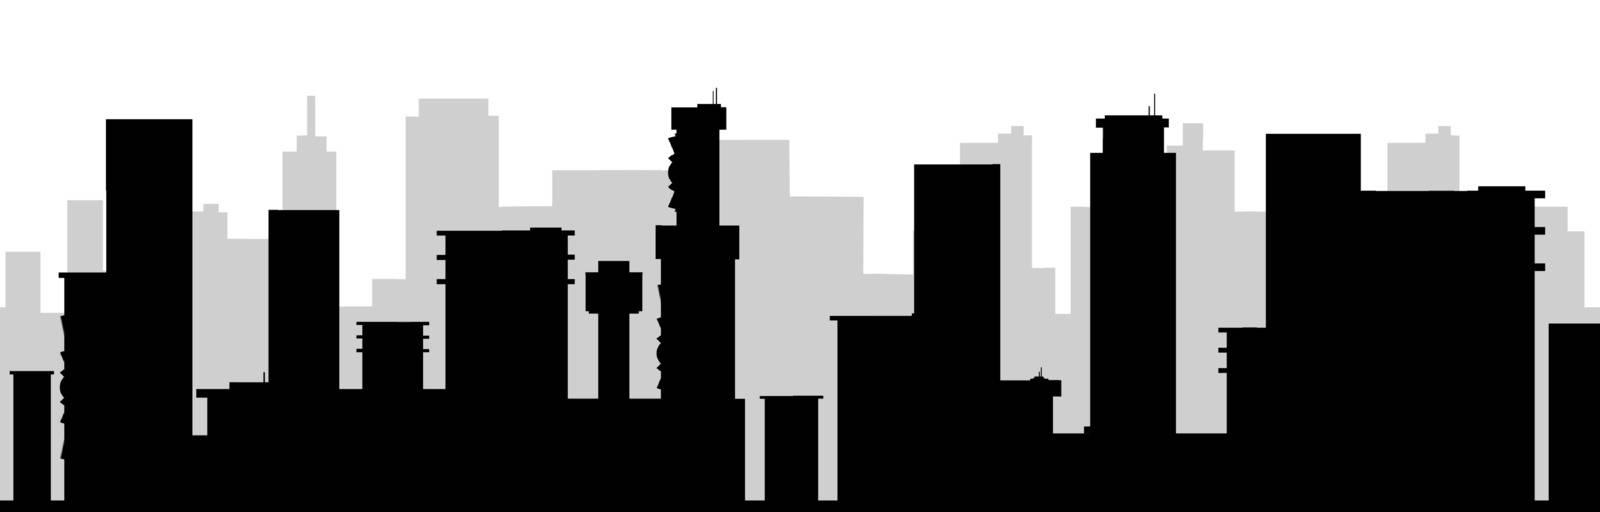 Cityscape black silhouette seamless border. Modern metropolis buildings monochrome vector illustration. City skyscrapers decorative ornament design. Urban scenery repeating pattern